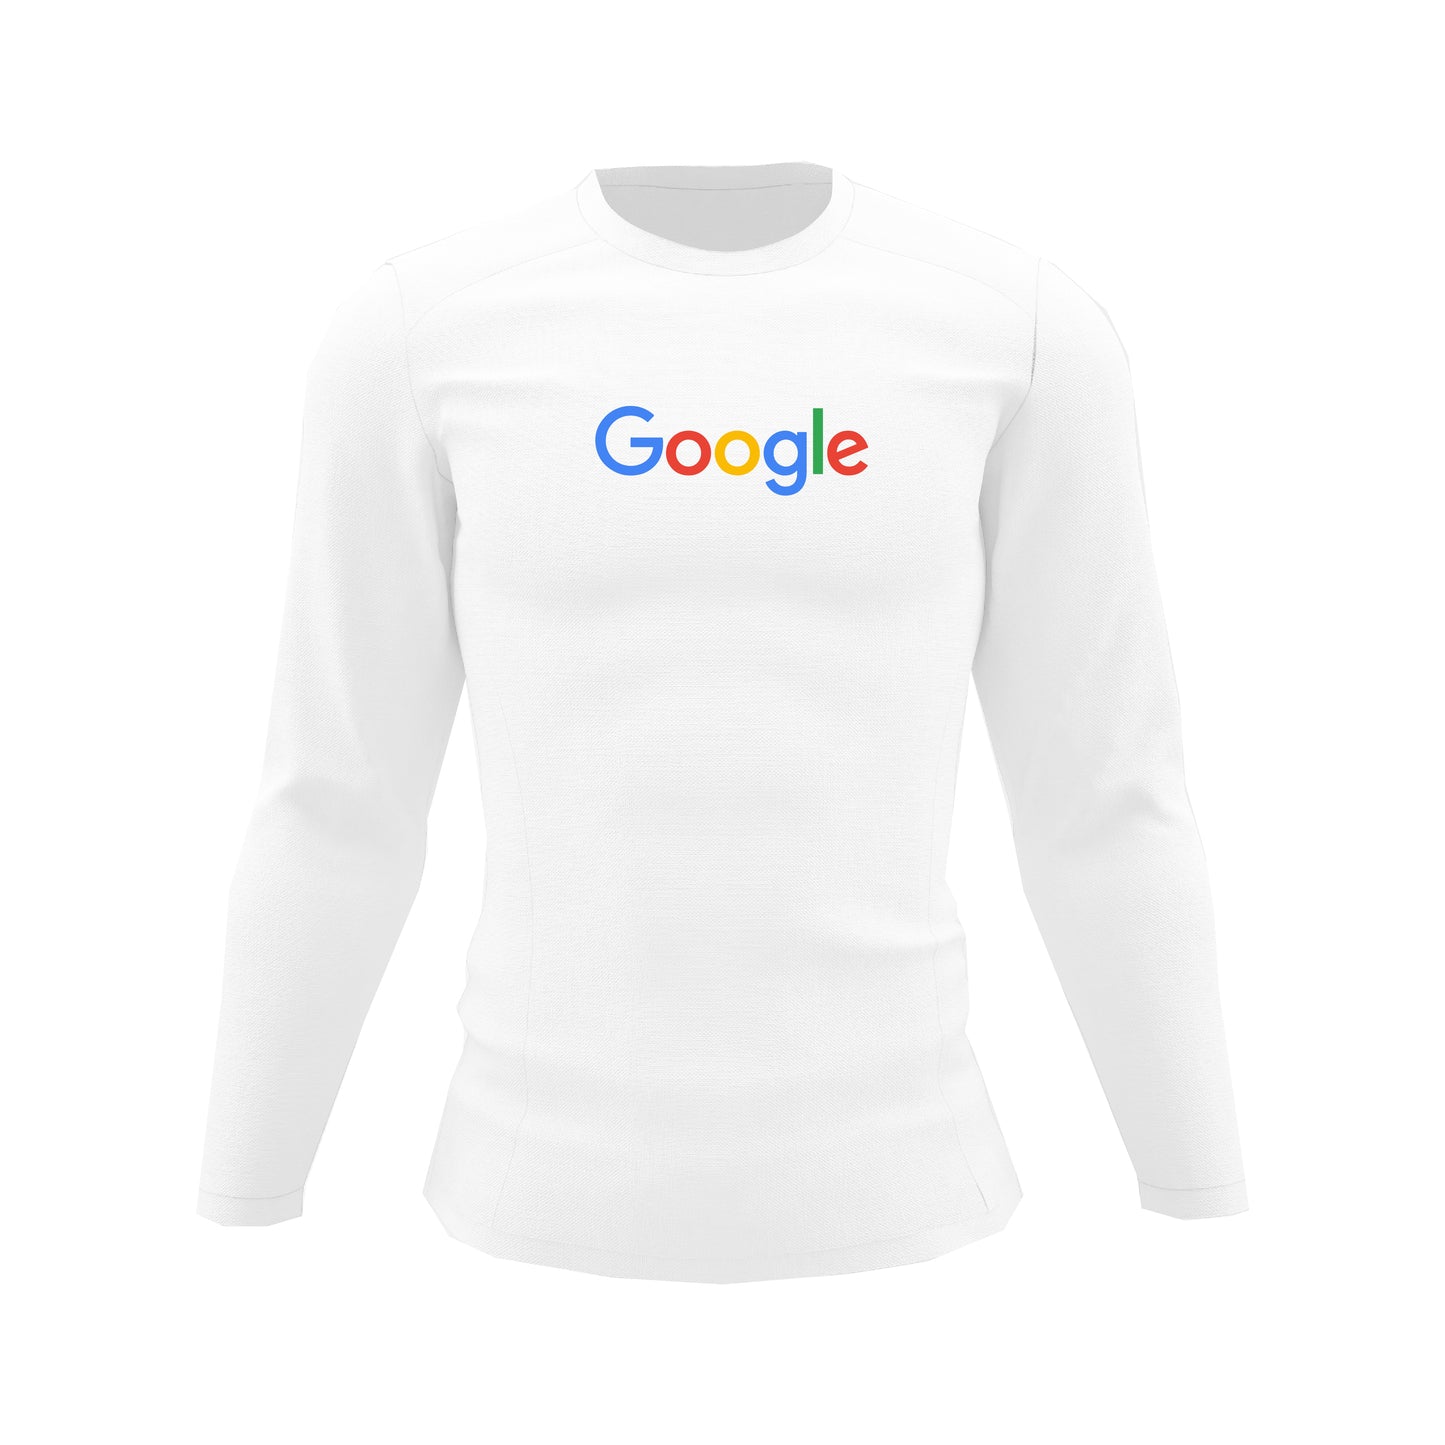 Google - Sweatshirt -  Model 1